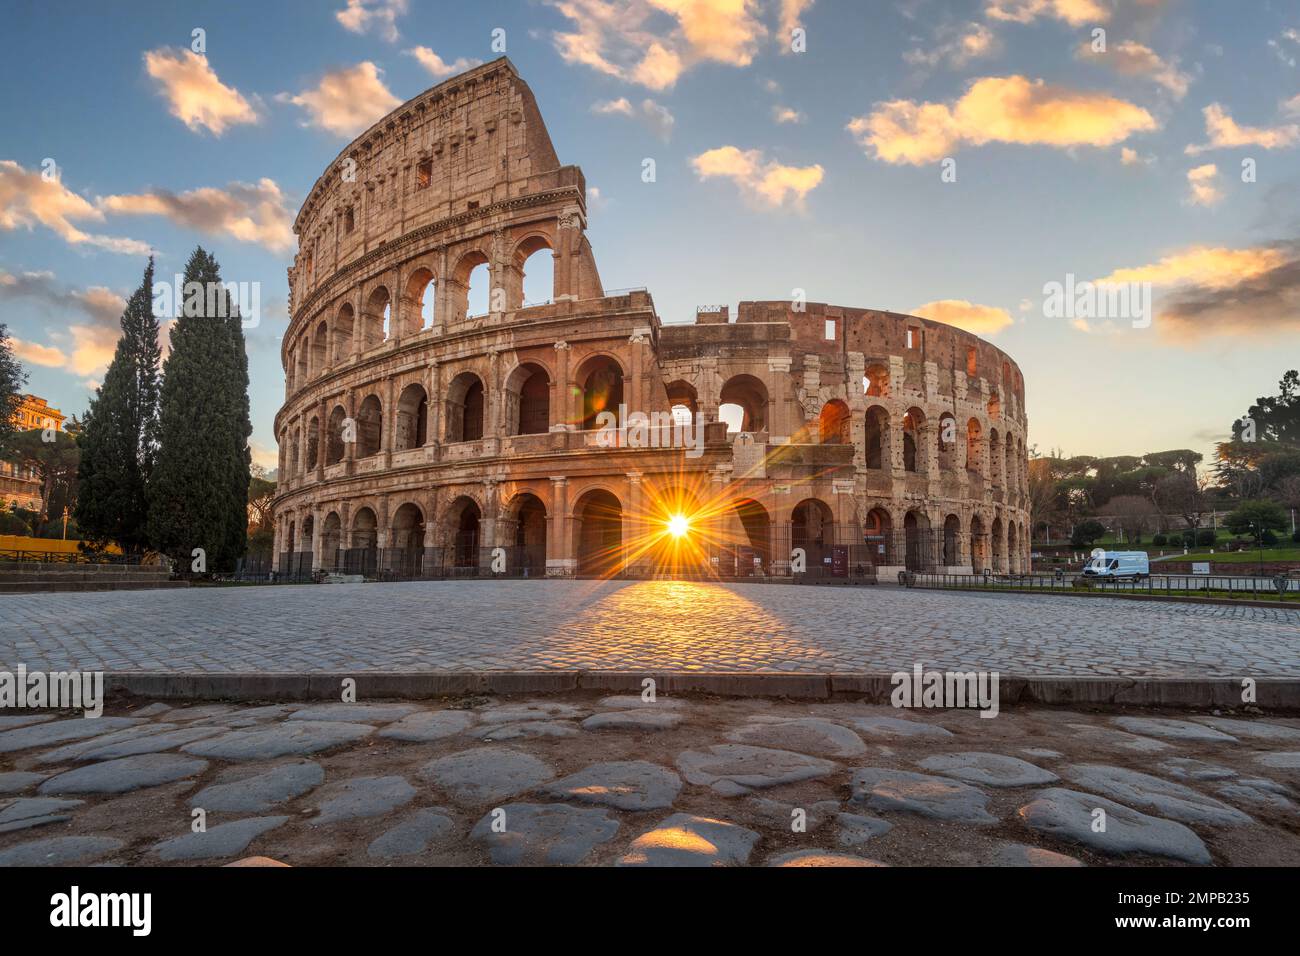 Rom, Italien im Kolosseum Amphitheater mit dem Sonnenaufgang durch den Eingang. Stockfoto